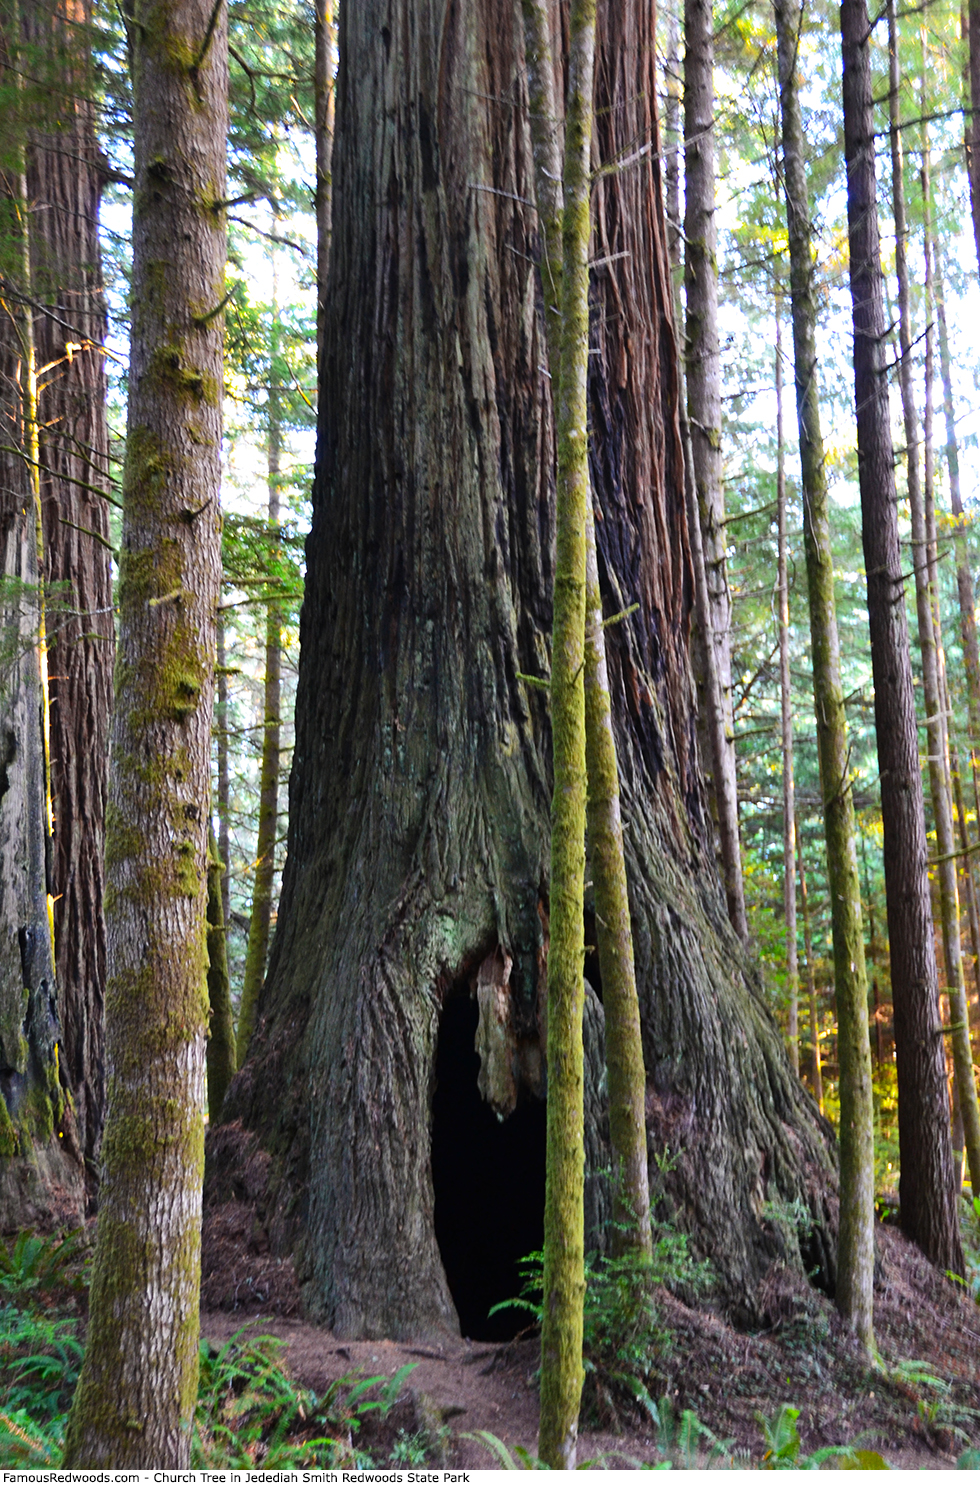 Jedediah Smith Redwoods State Park - Church Tree